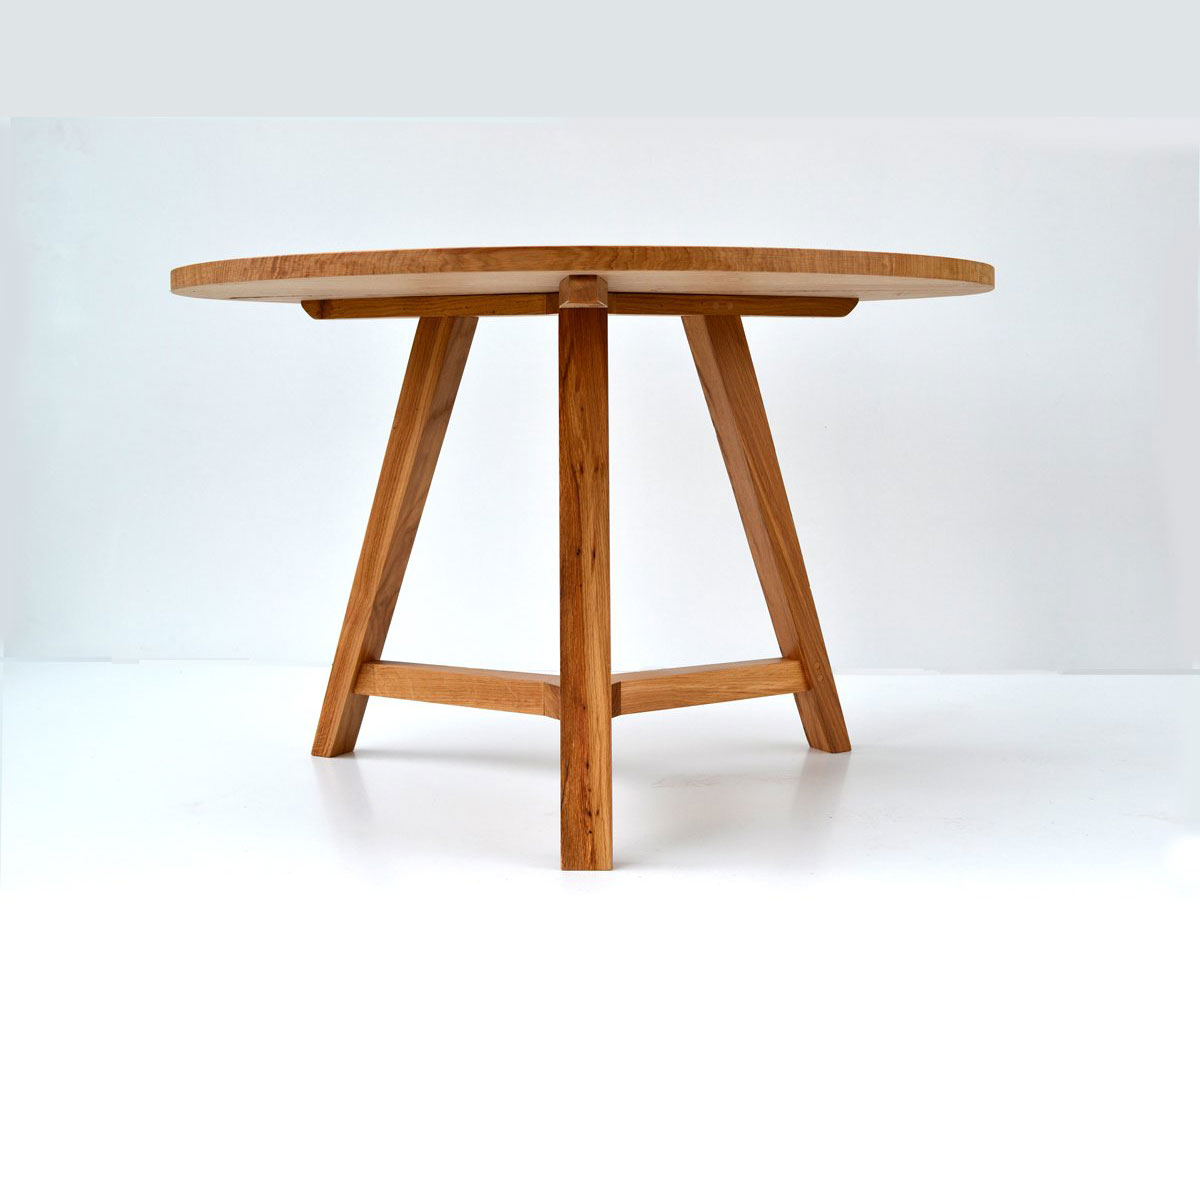 A round oak kitchen table